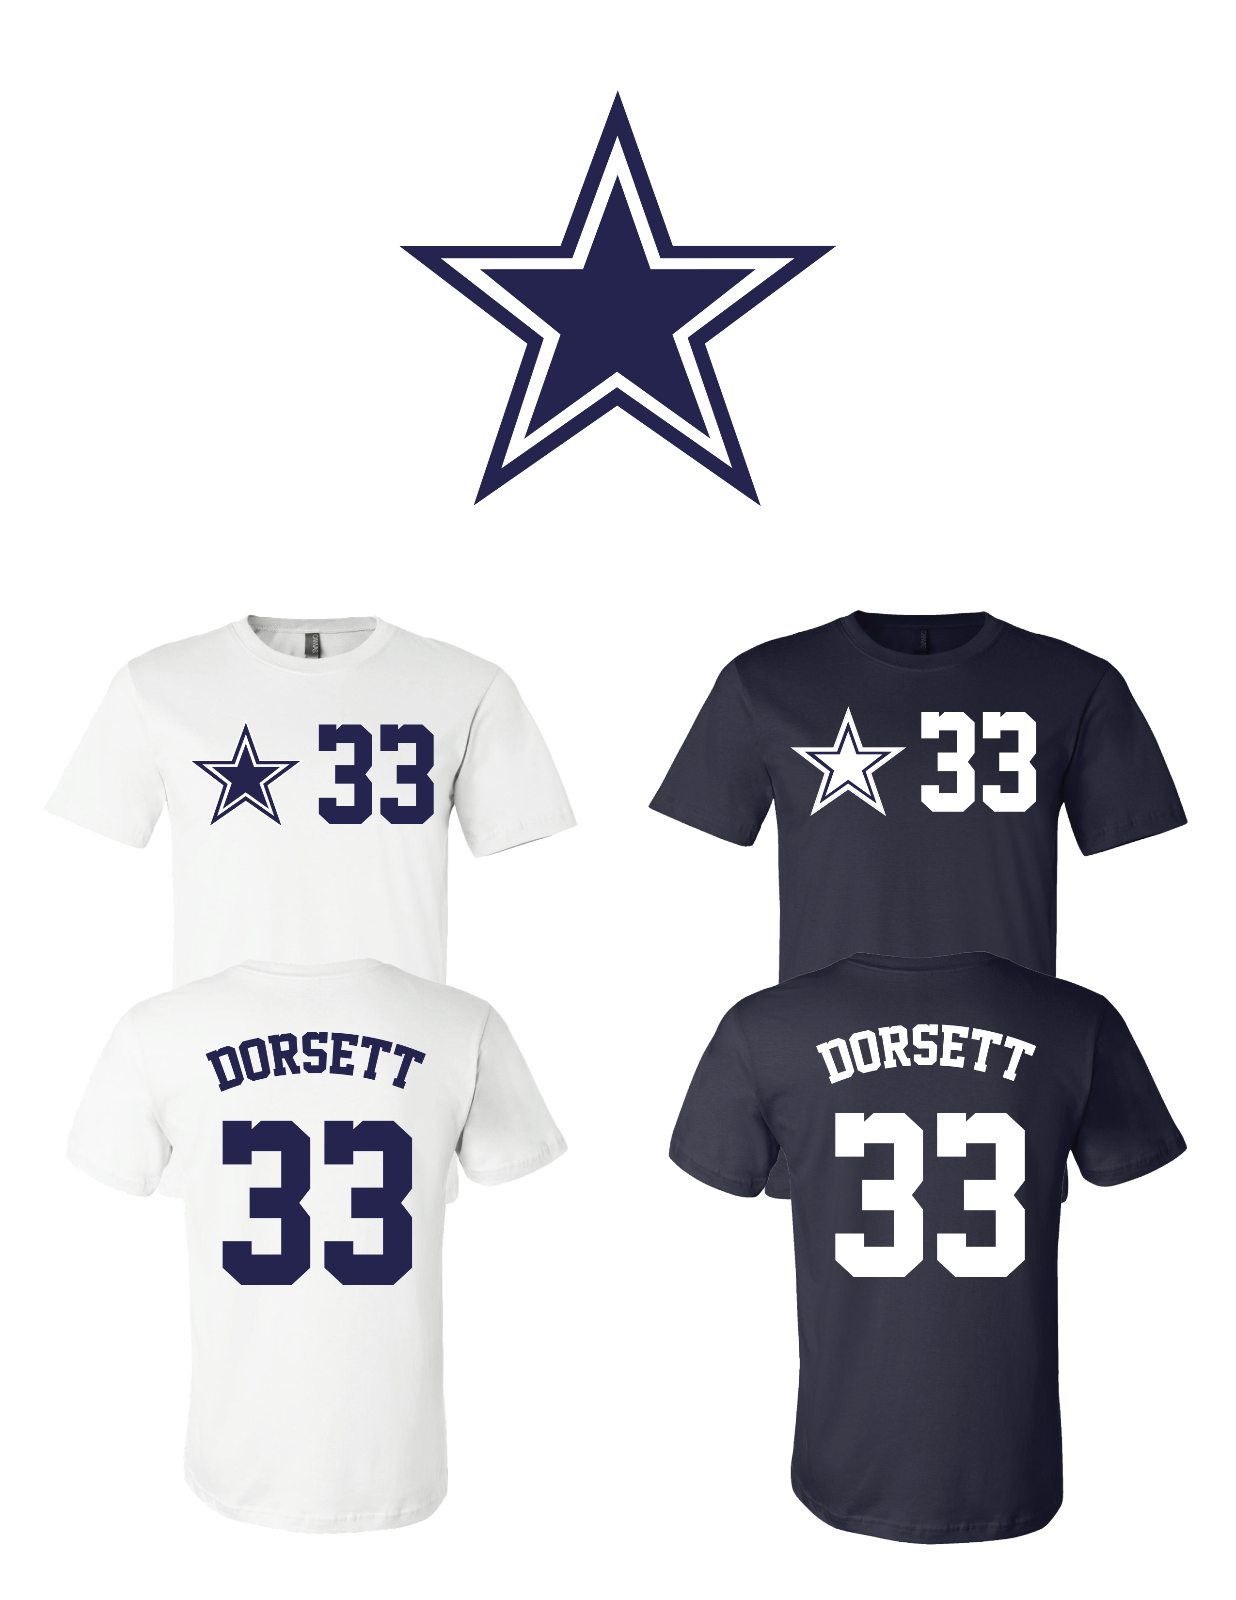 Tony Dorsett #33 Dallas Cowboys Jersey player shirt